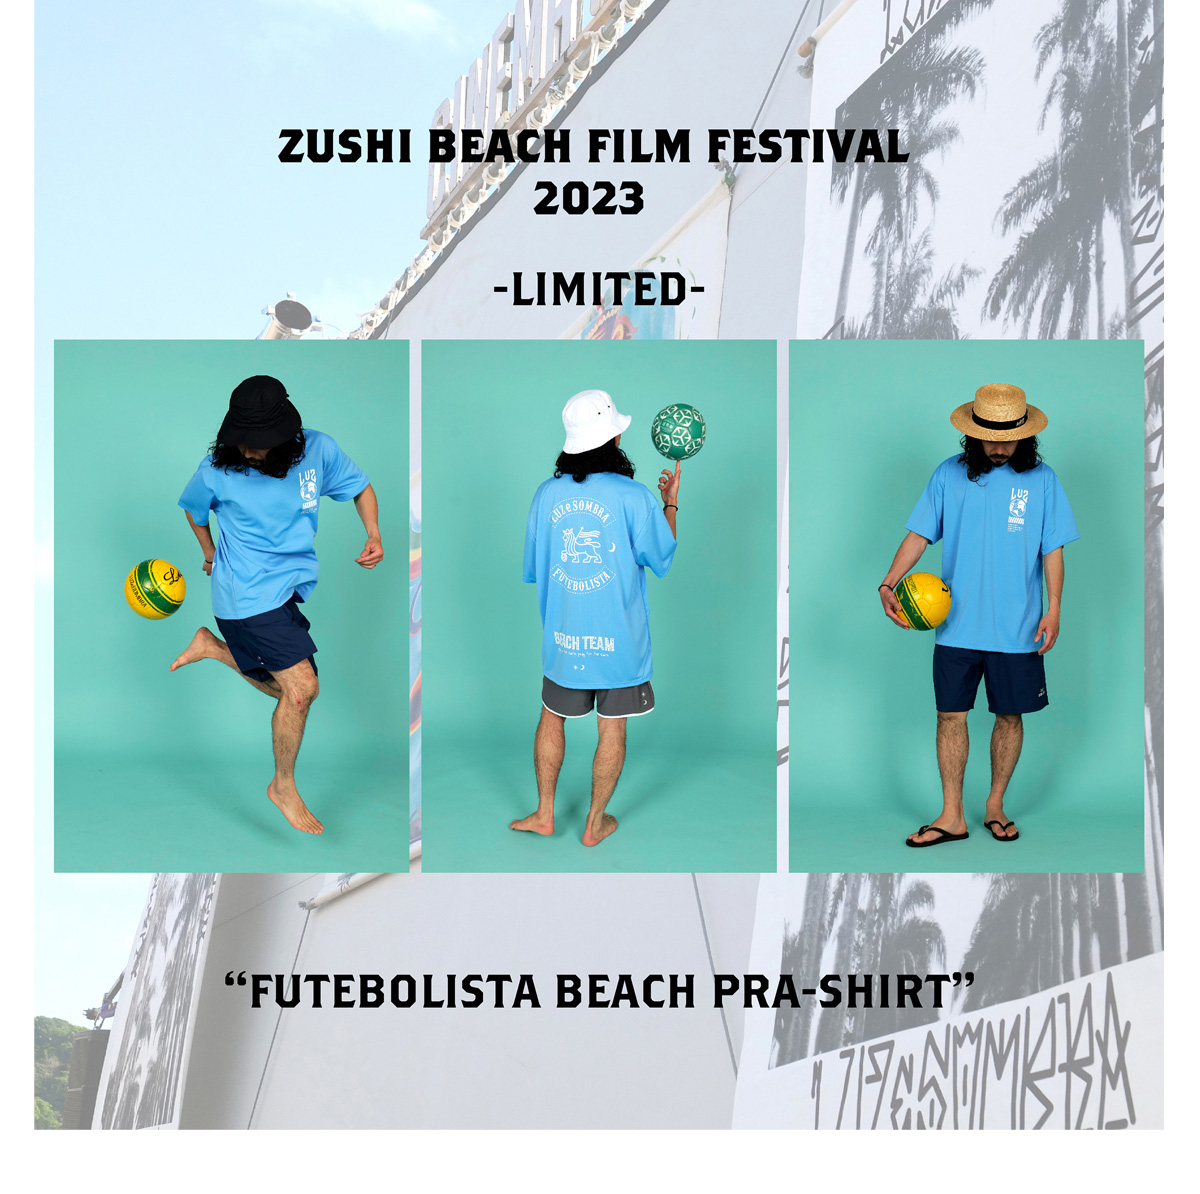 ZUSHI BEACH FILM FESTIVAL 2023 TITLE